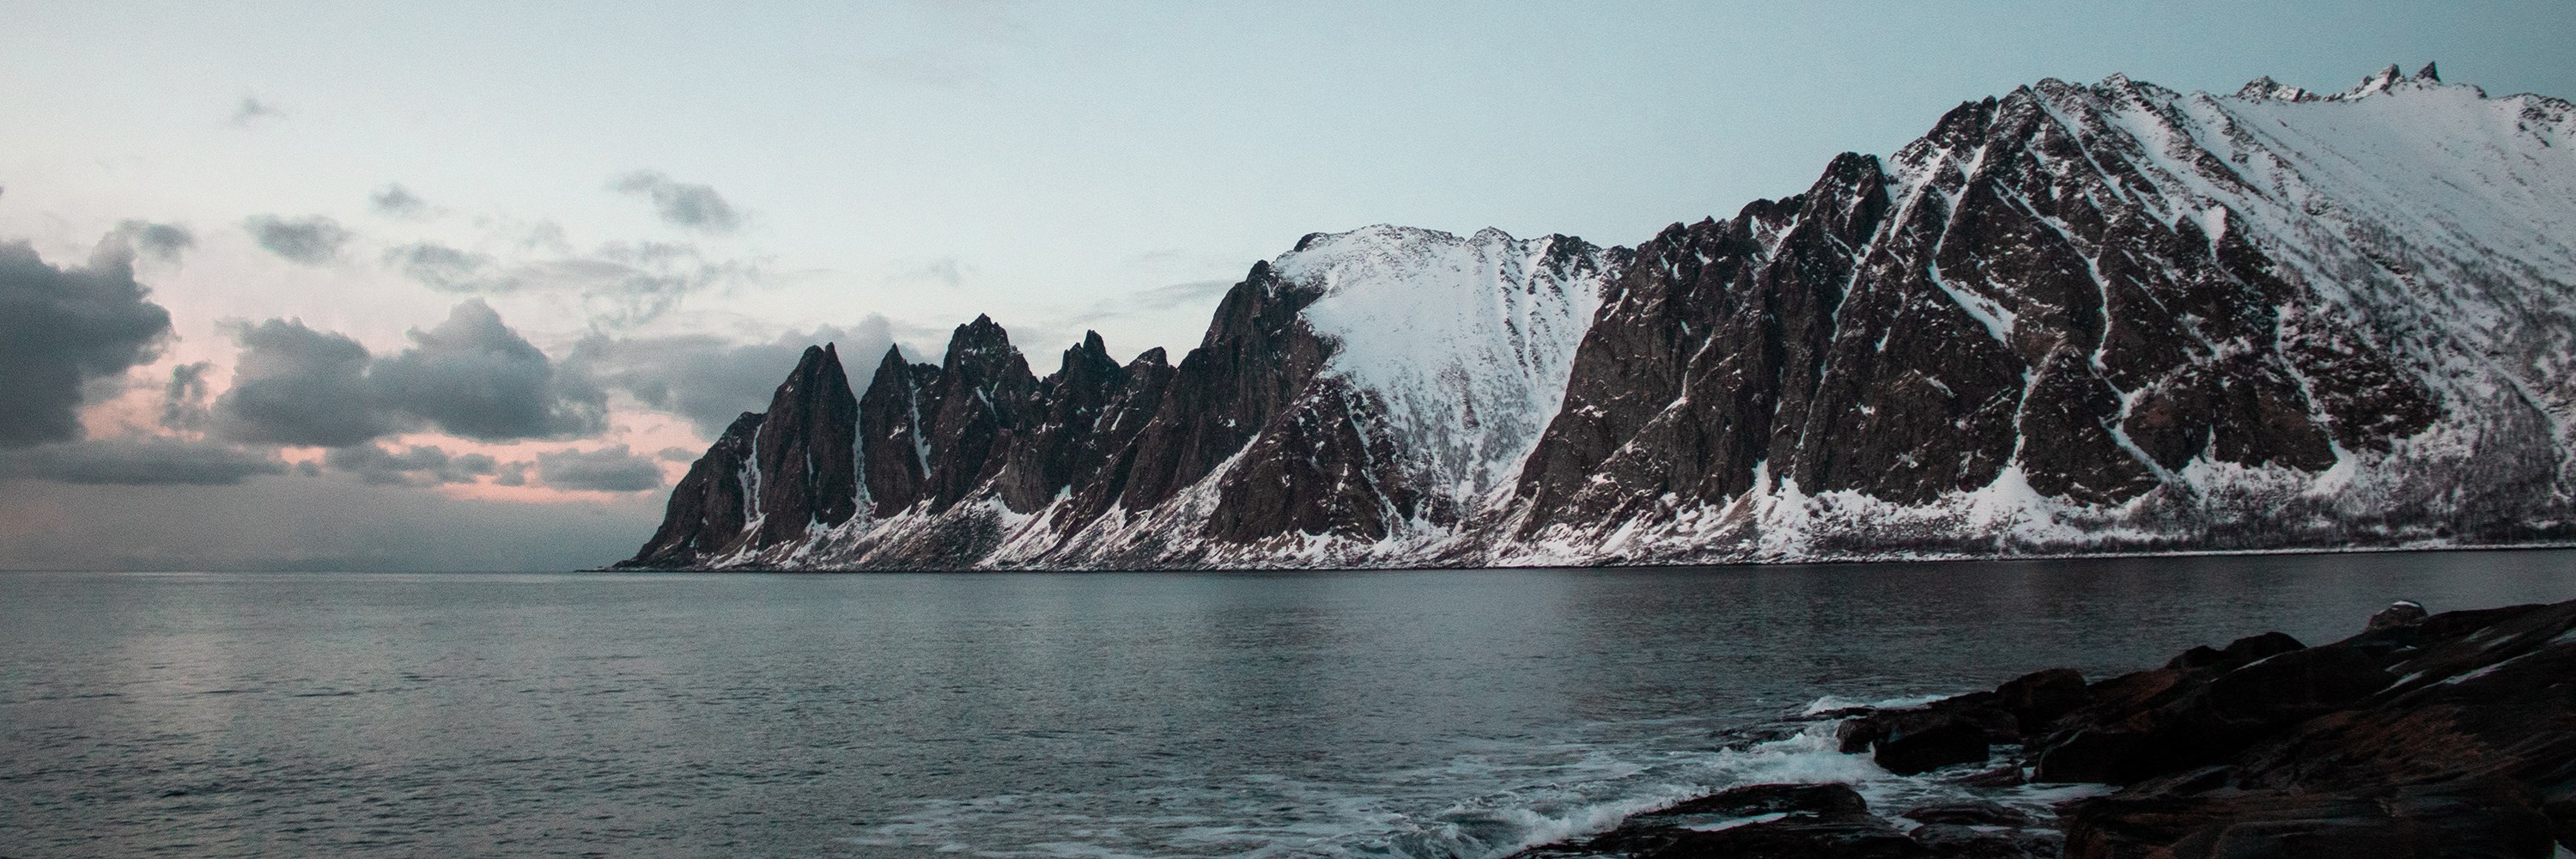 Landskap i Nord-Norge. Illustrasjonsfoto